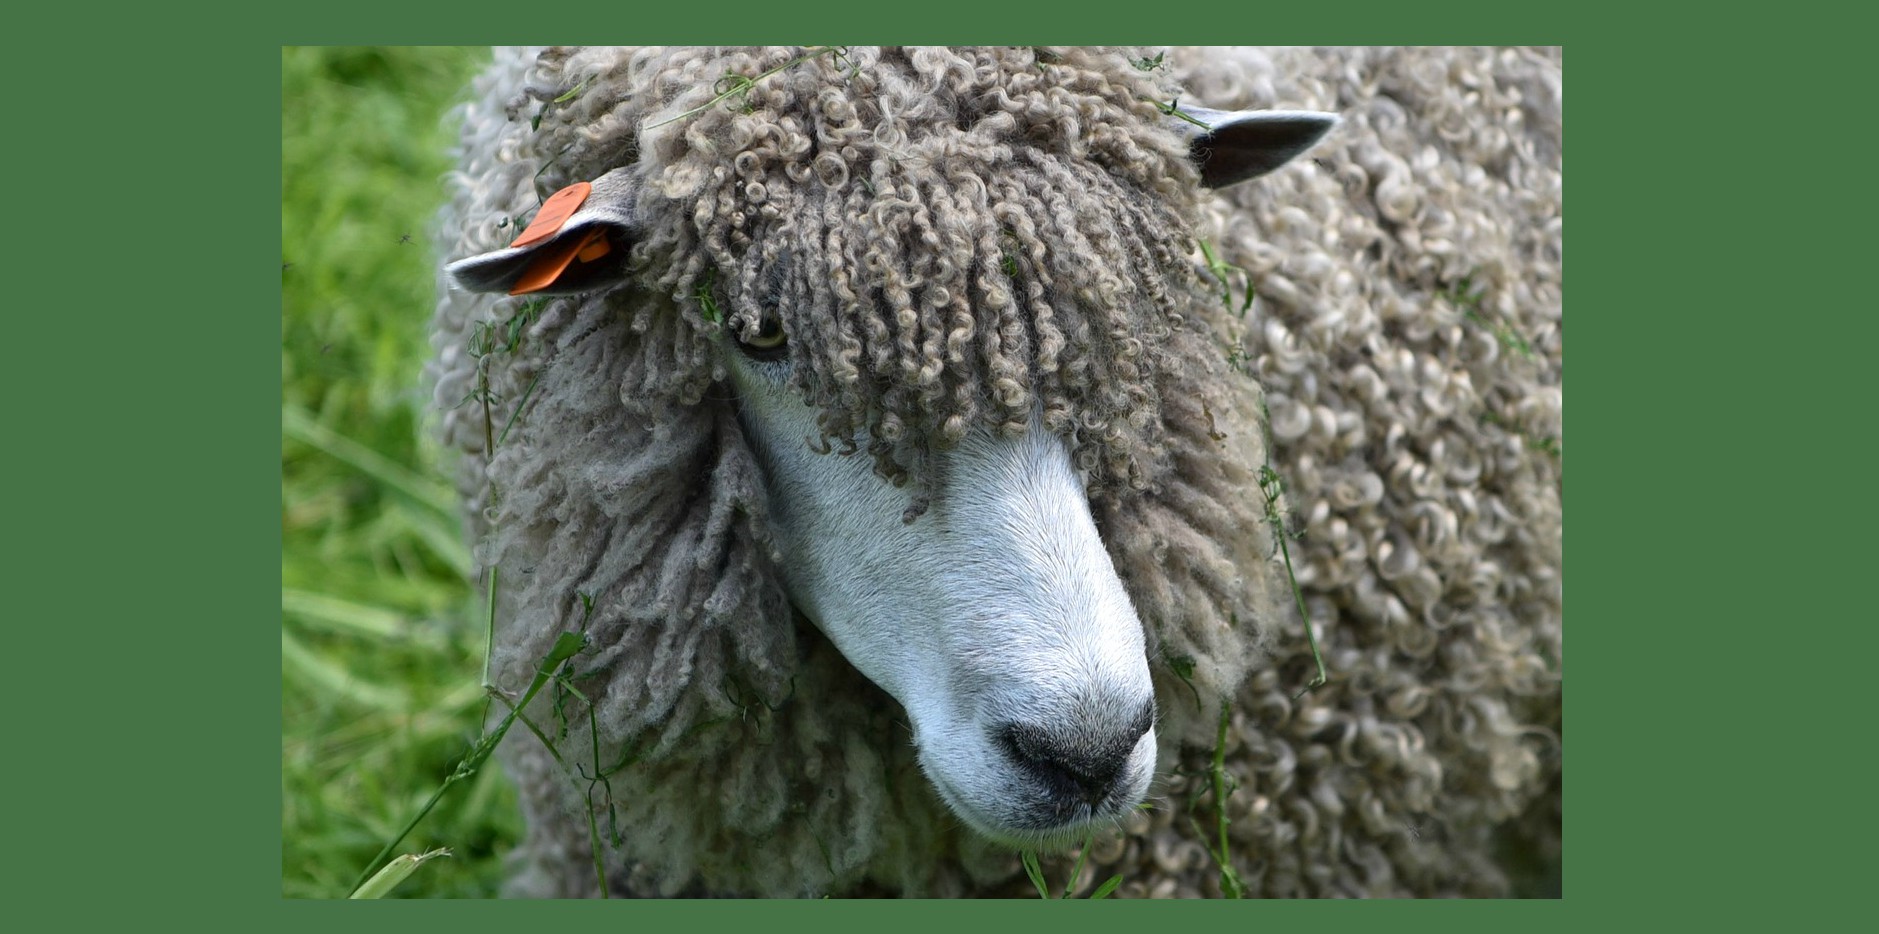 The Good Shepherd: Shear Misery